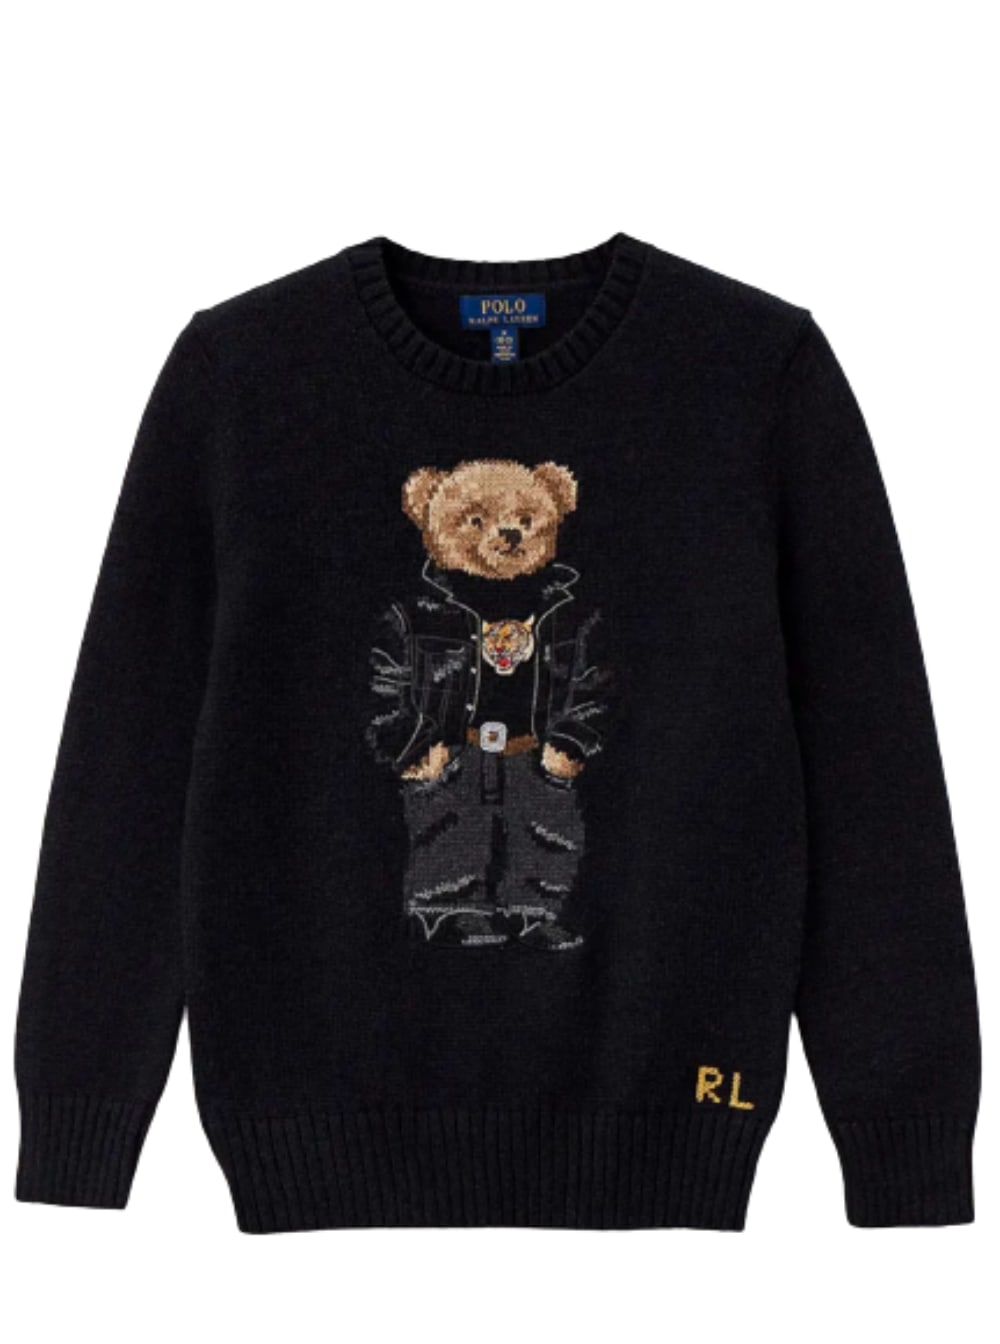 Polo Ralph Lauren Kids Boys Black Cotton Sweater With Bear Intarsia